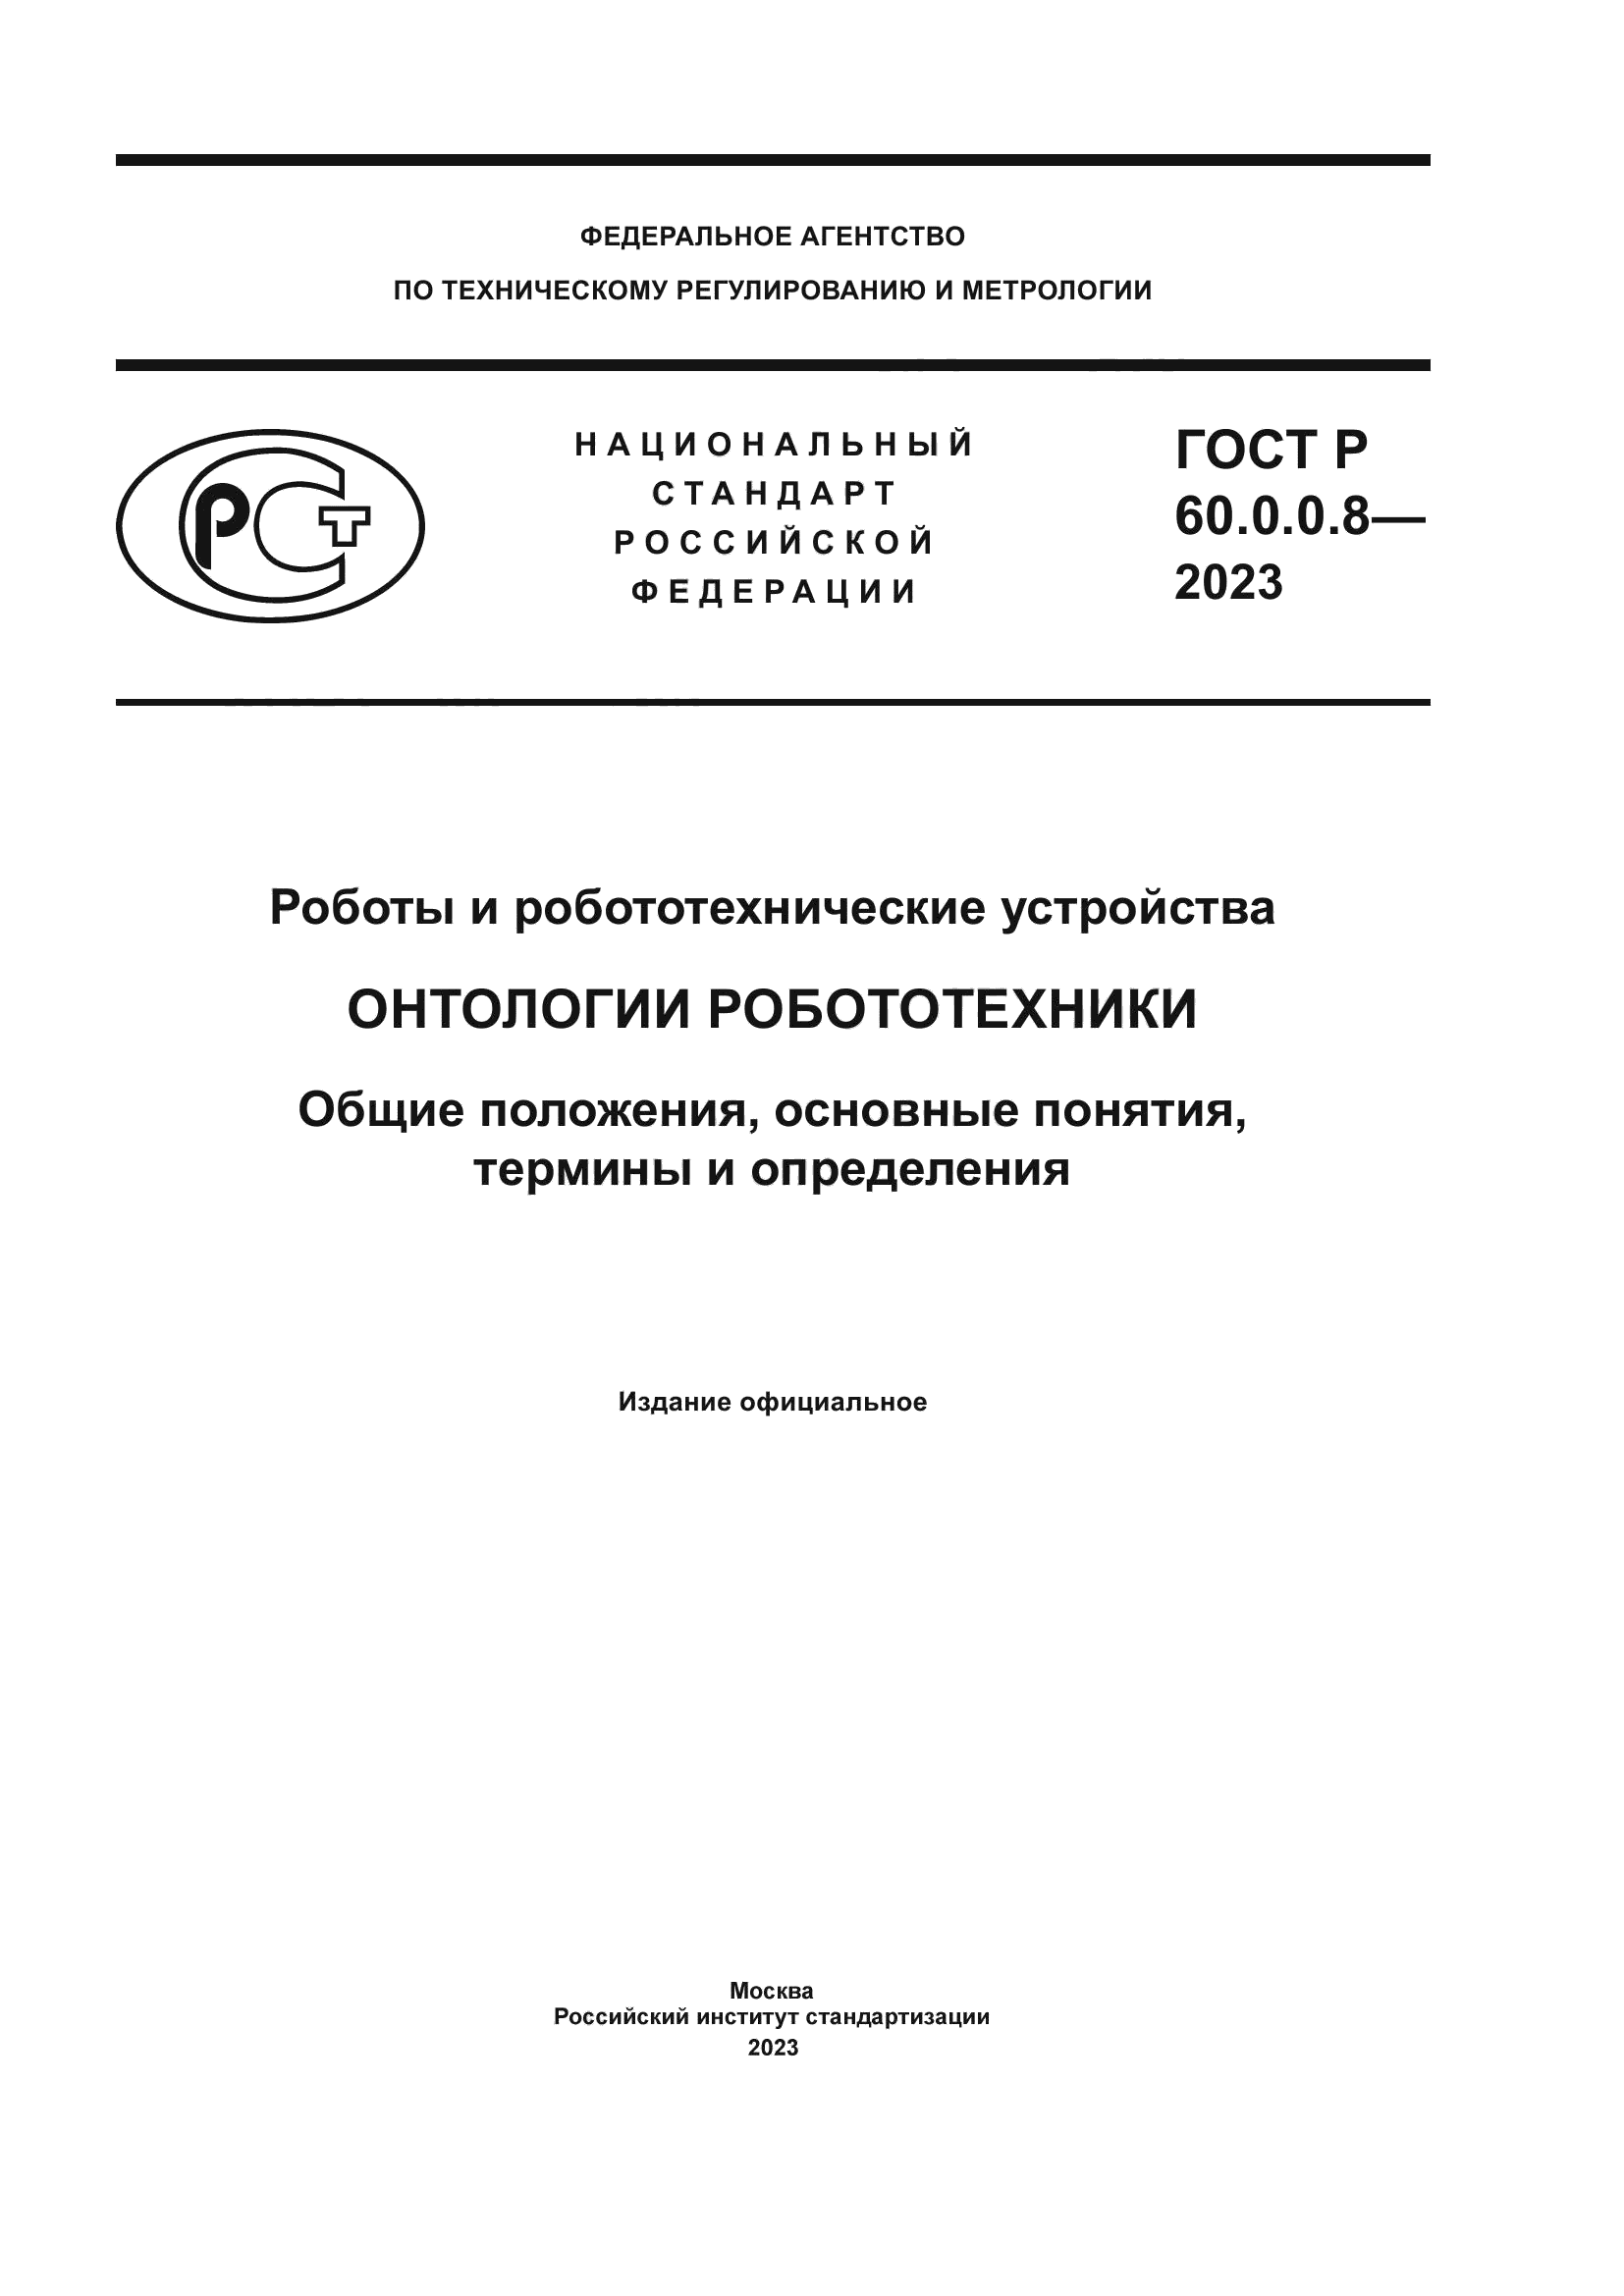 ГОСТ Р 60.0.0.8-2023